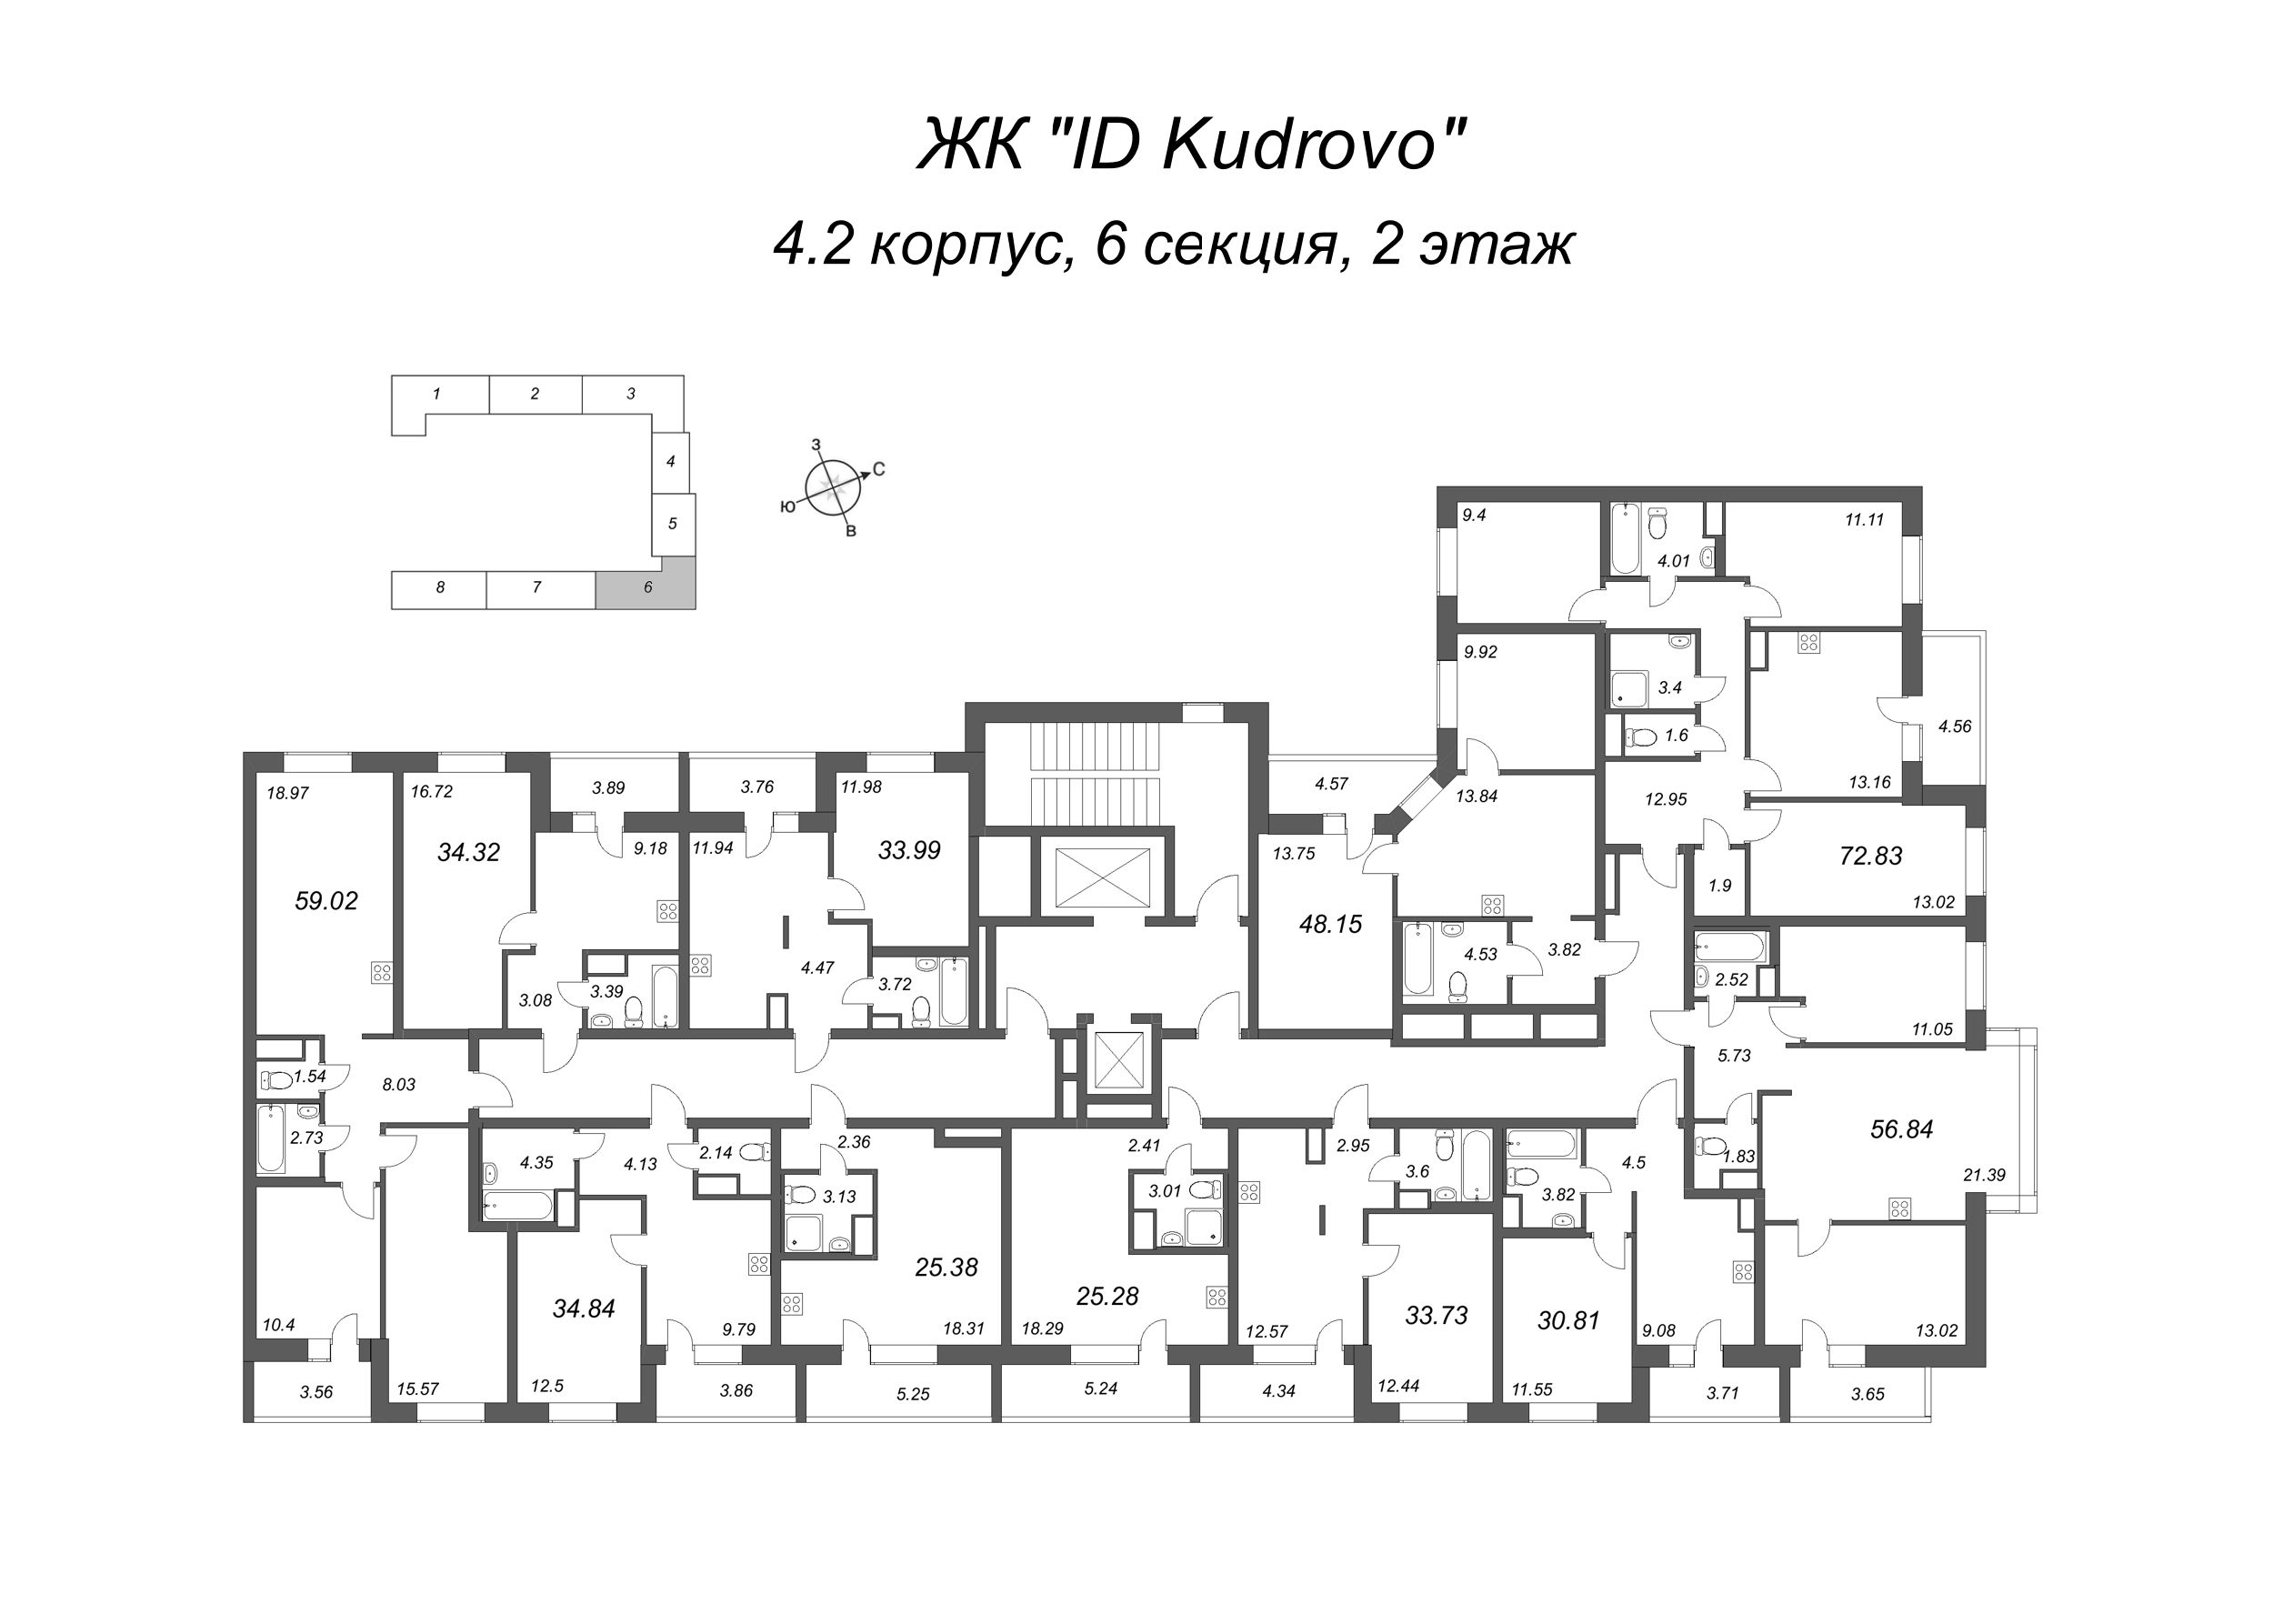 3-комнатная (Евро) квартира, 59.02 м² - планировка этажа